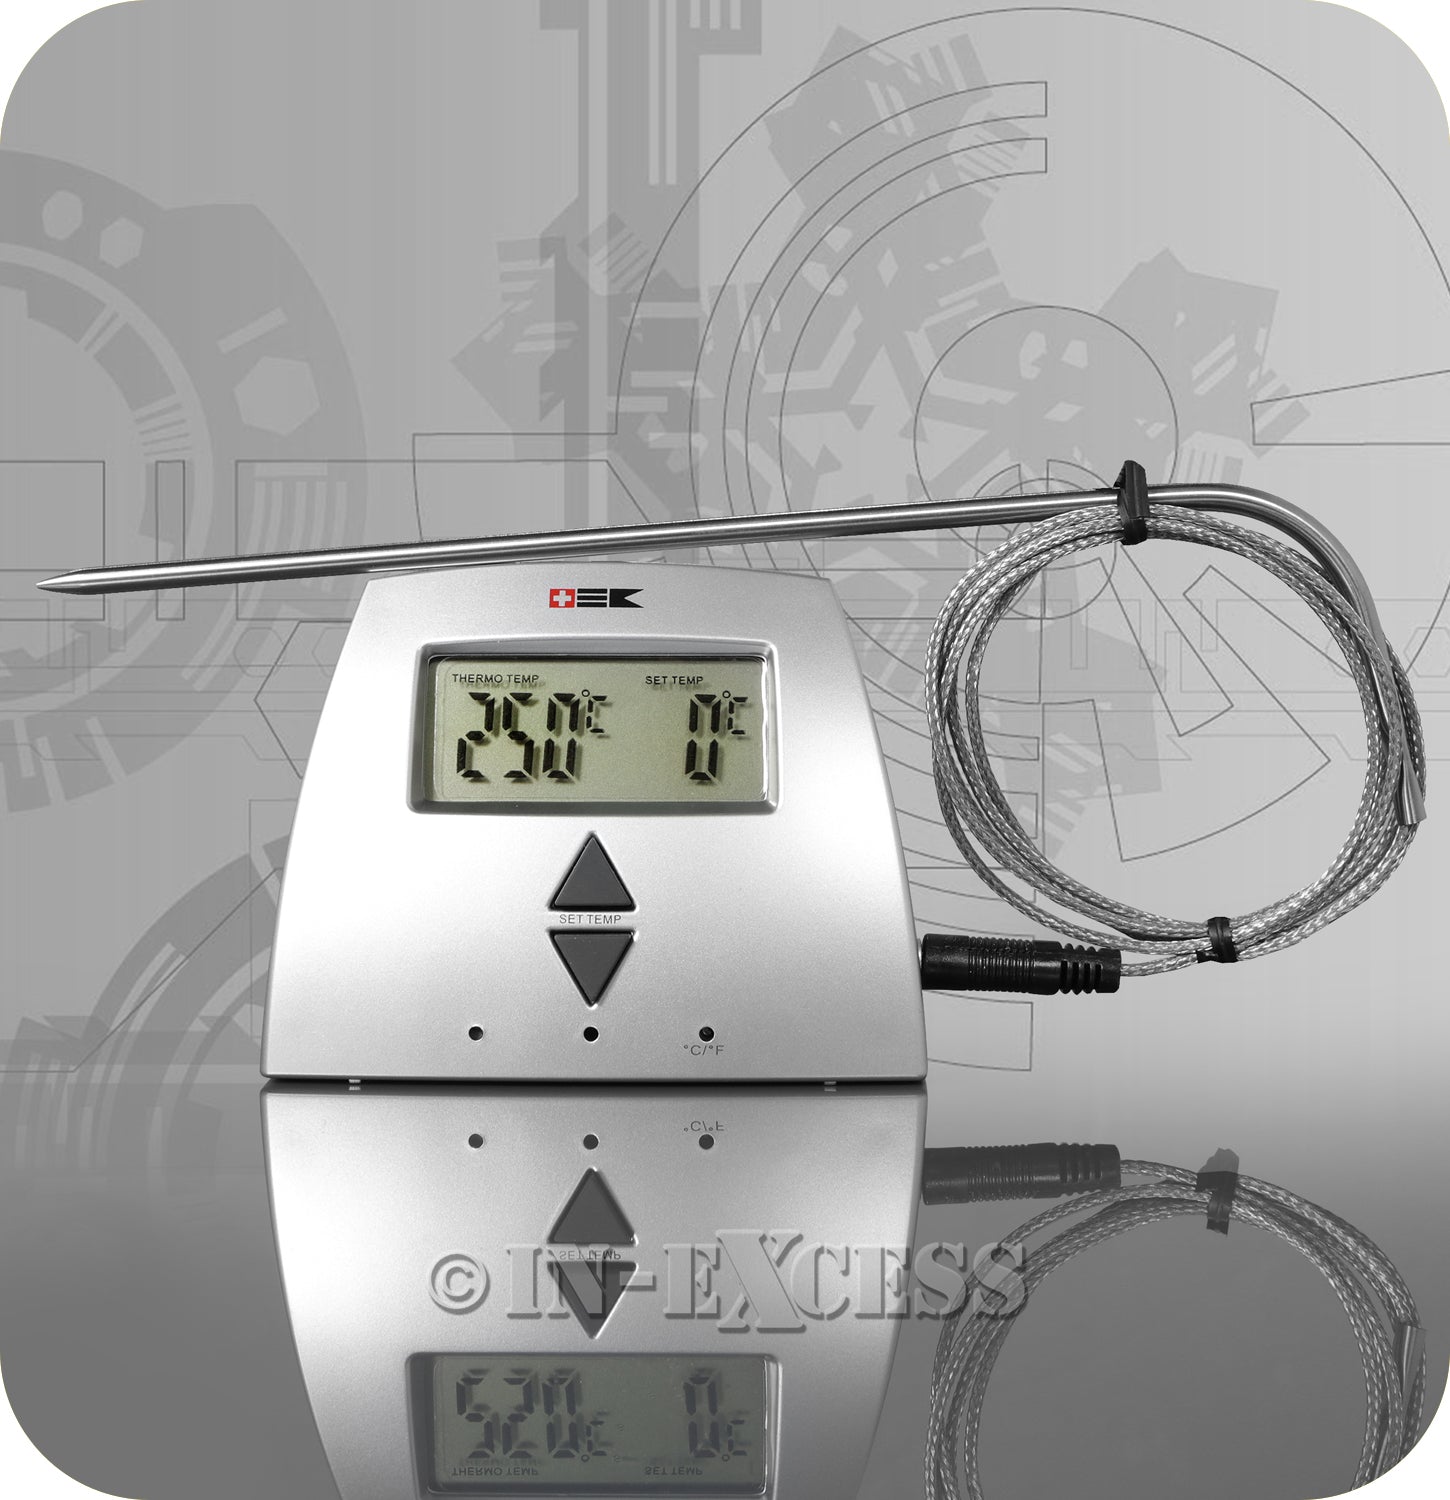 Bengt Ek Digital Meat Temperature Cooking Thermometer - 0°C-250°C